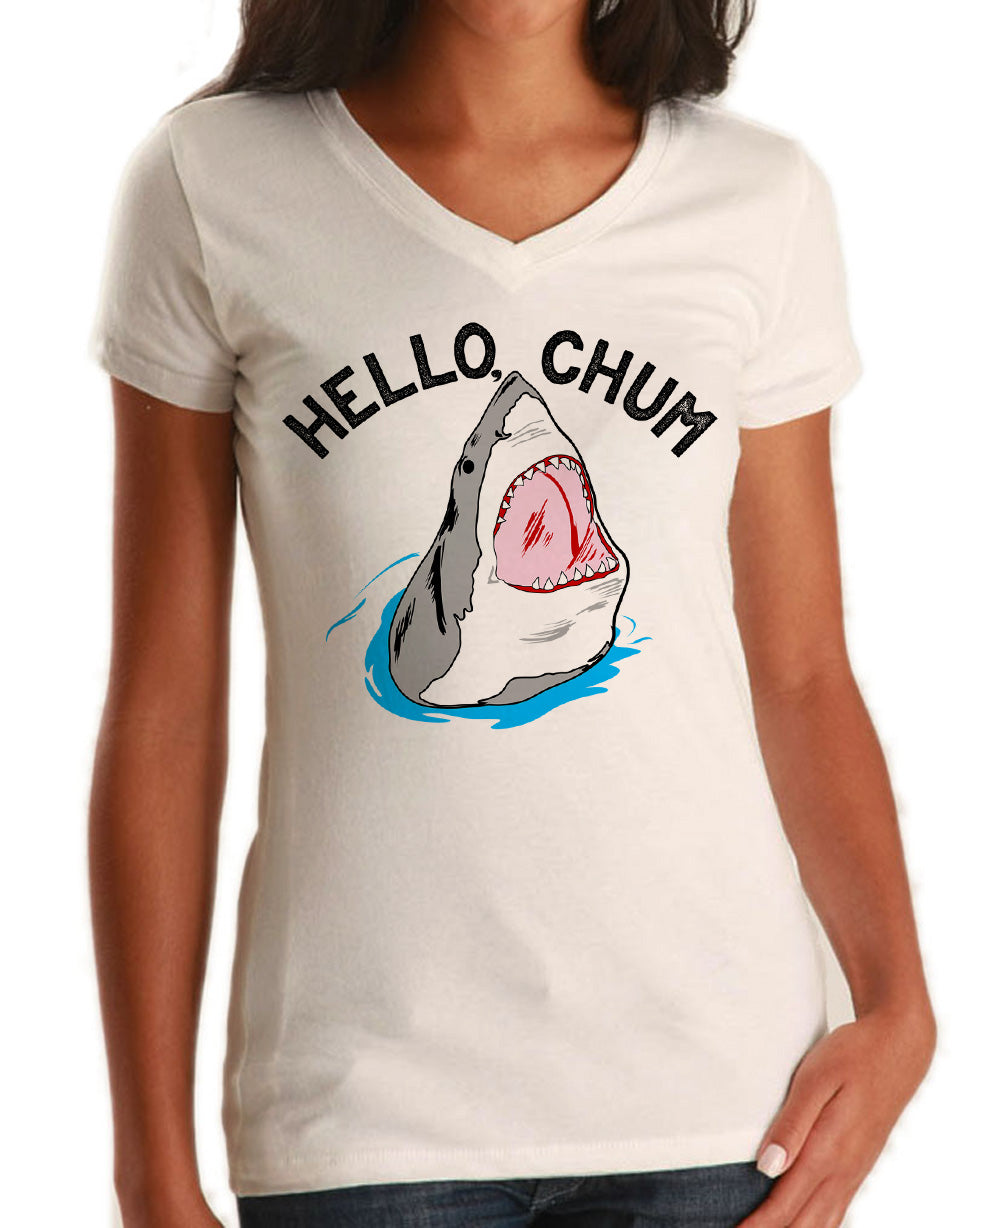 Women's Hello Chum Shark Vneck T-Shirt